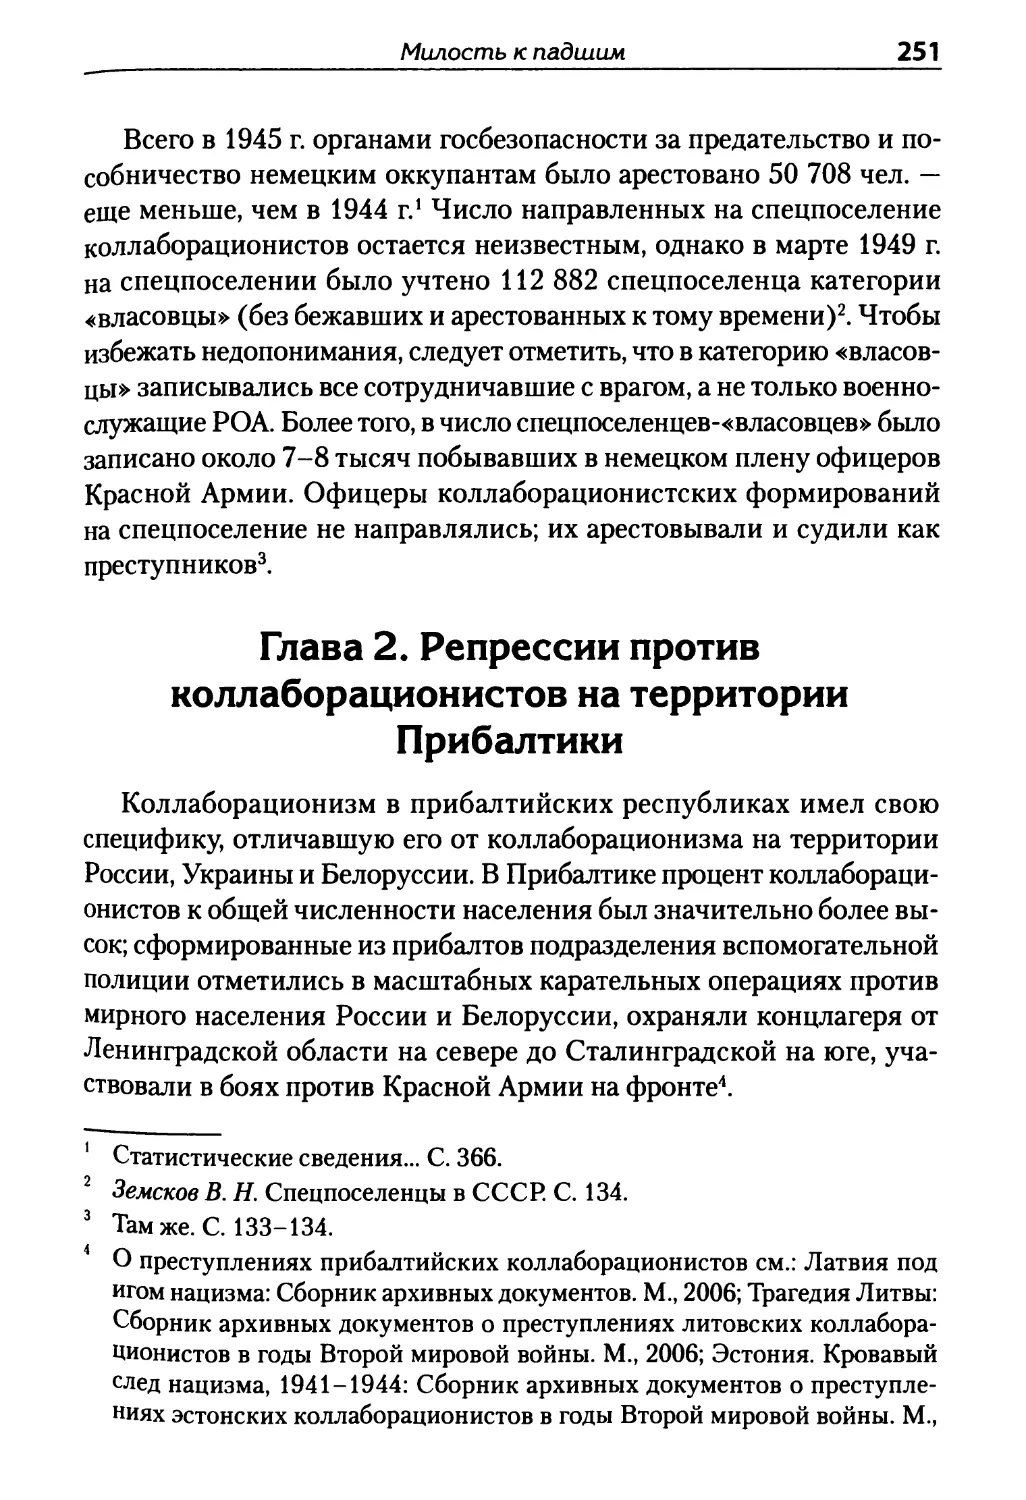 Глава 2. Репрессии против коллаборационистов на территории Прибалтики